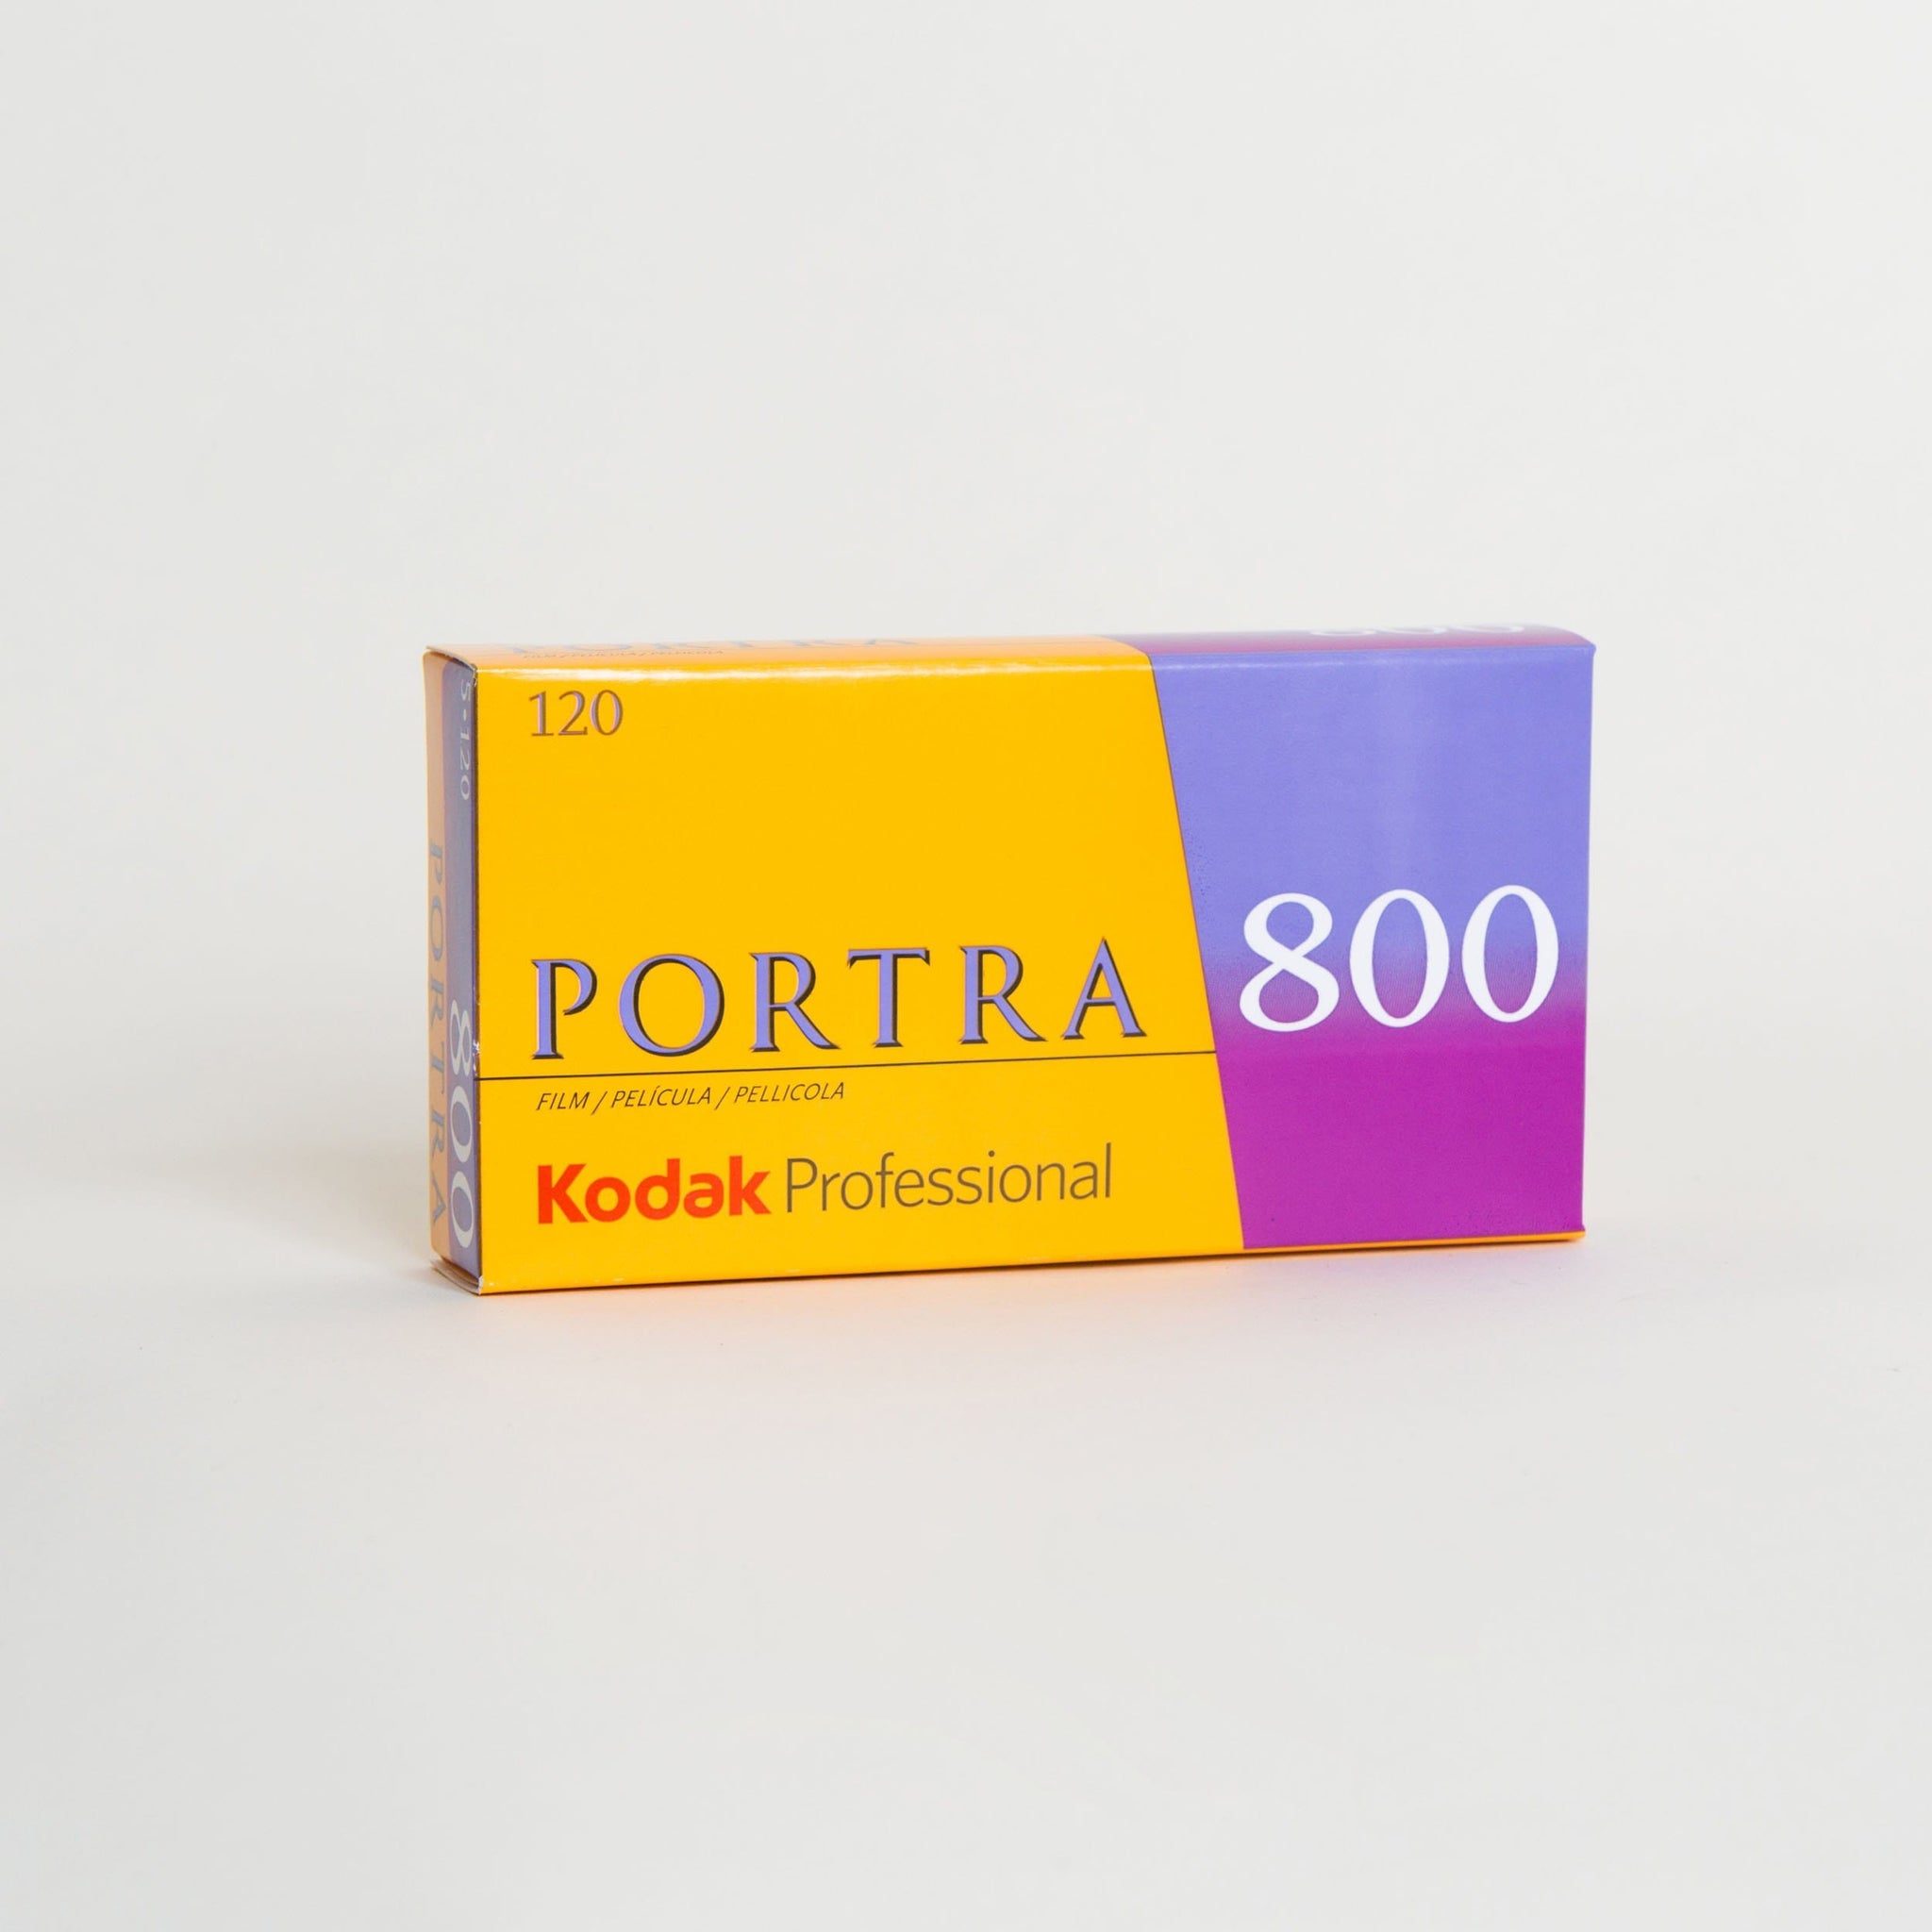 Kodak Portra 800, 120 Medium Format, Color Film (Pro-Pack of 5 Rolls)